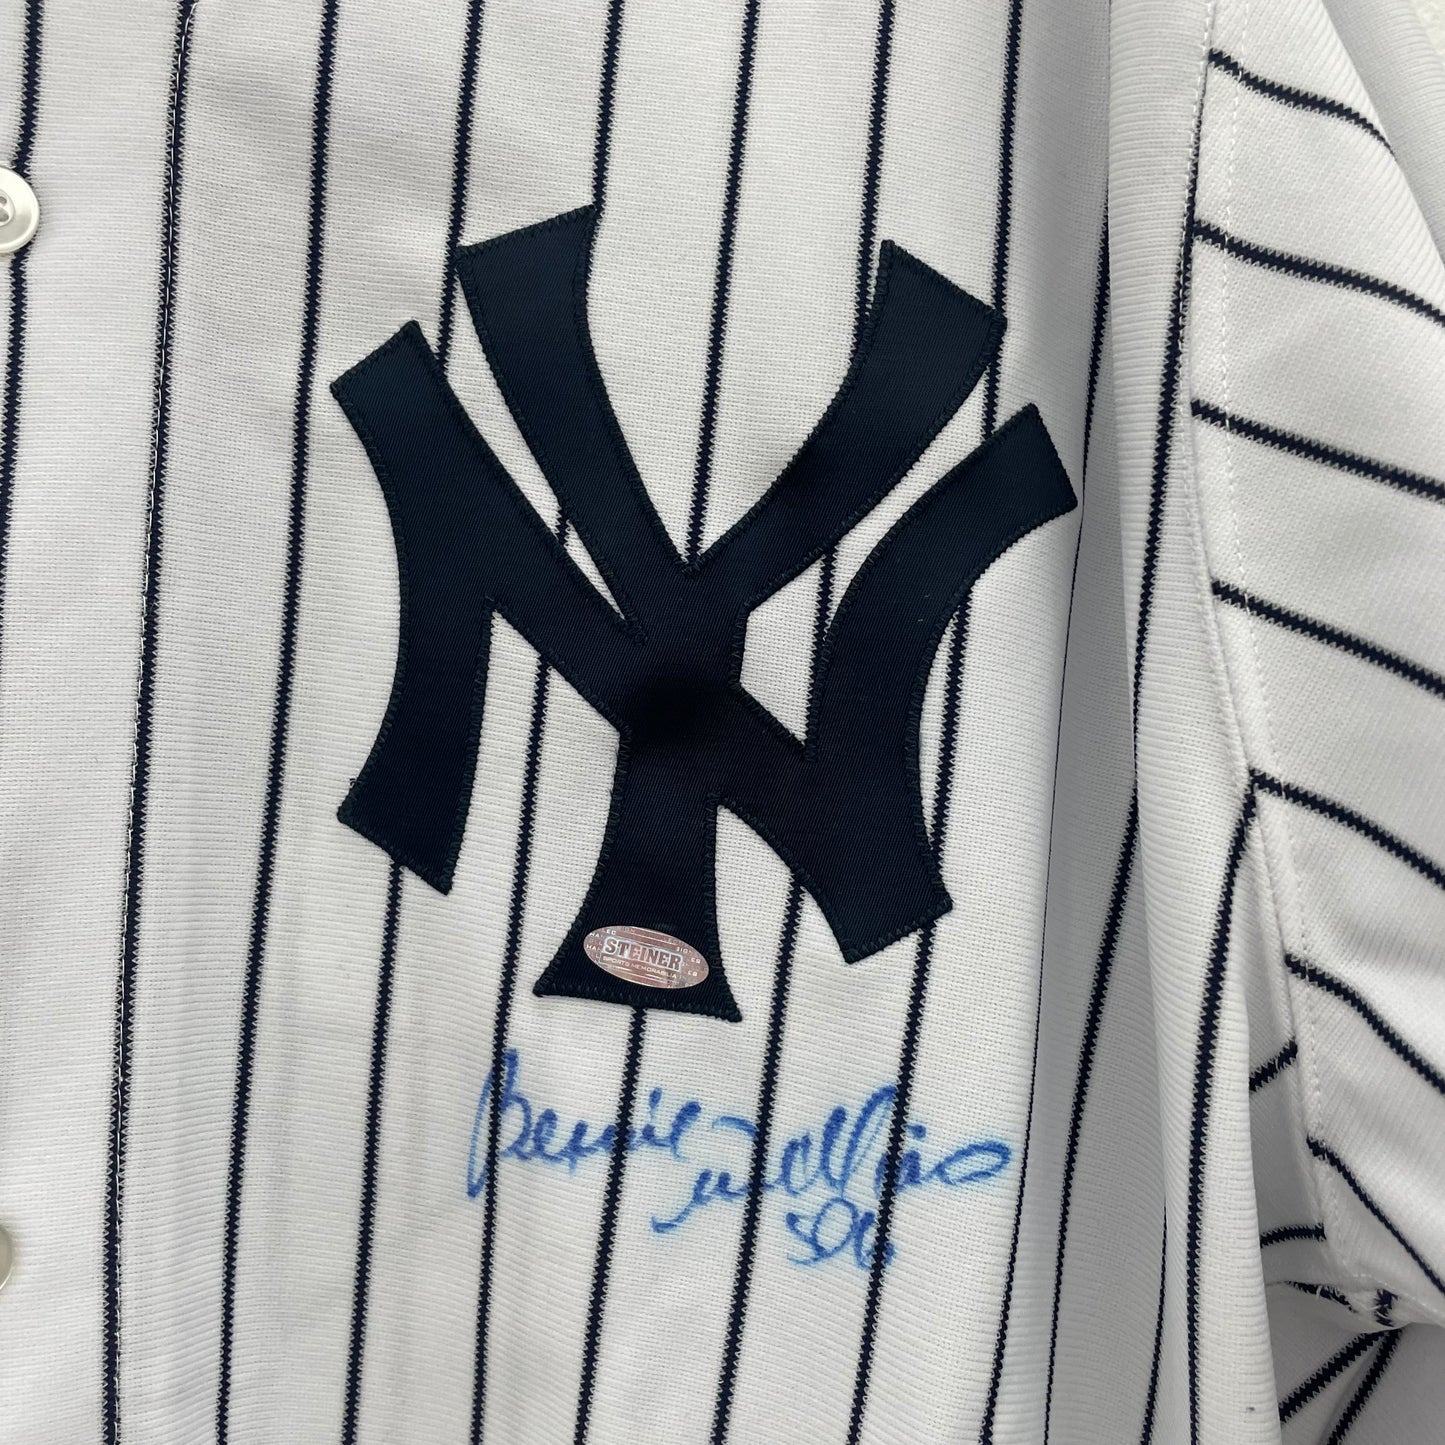 Bernie Williams Signed Auto New York Yankees Authentic Home Jersey Steiner Cert